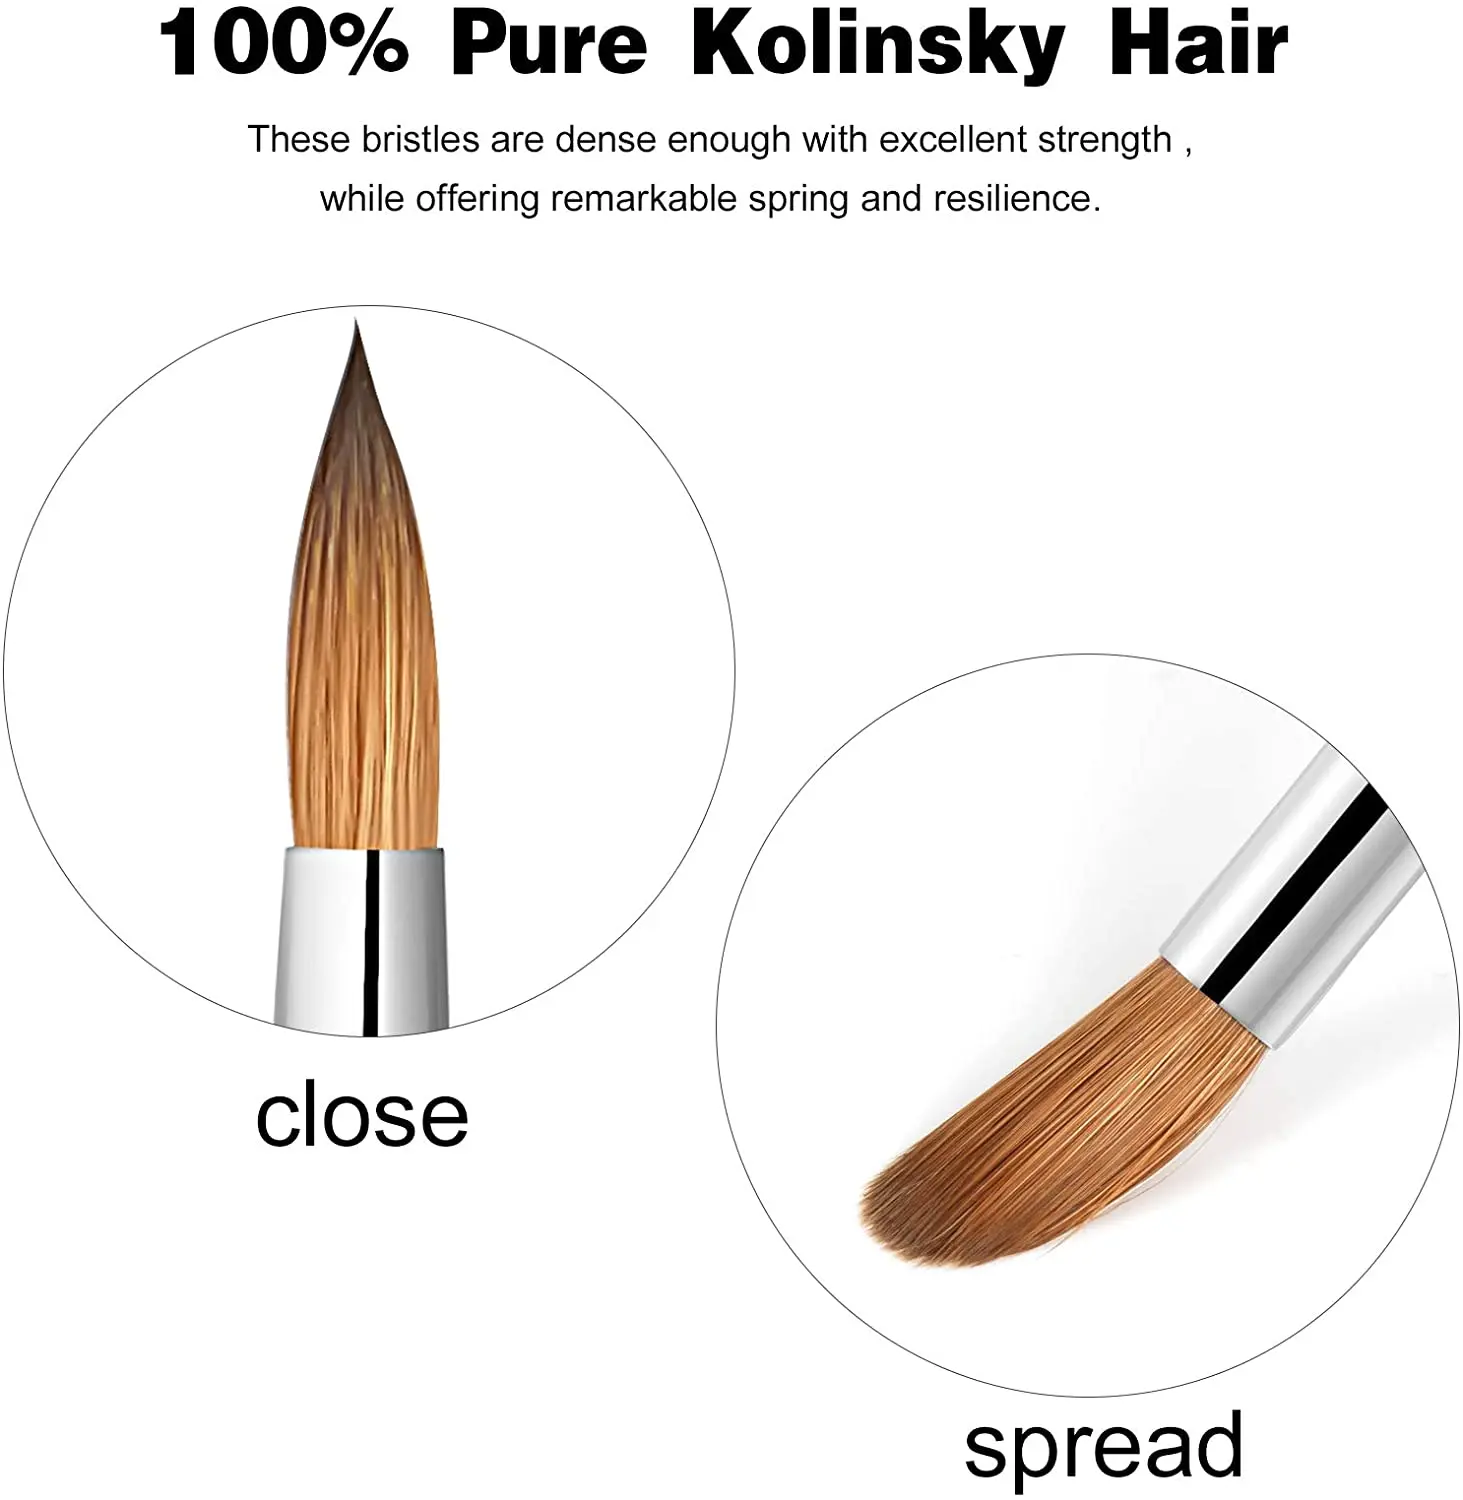 PCUORLEORS Kolinsky Acrylic Nail Brush with Round Wood Texture 100% Pure Kolinsky Sable Hair Brush for UV Shaping Gel Brush